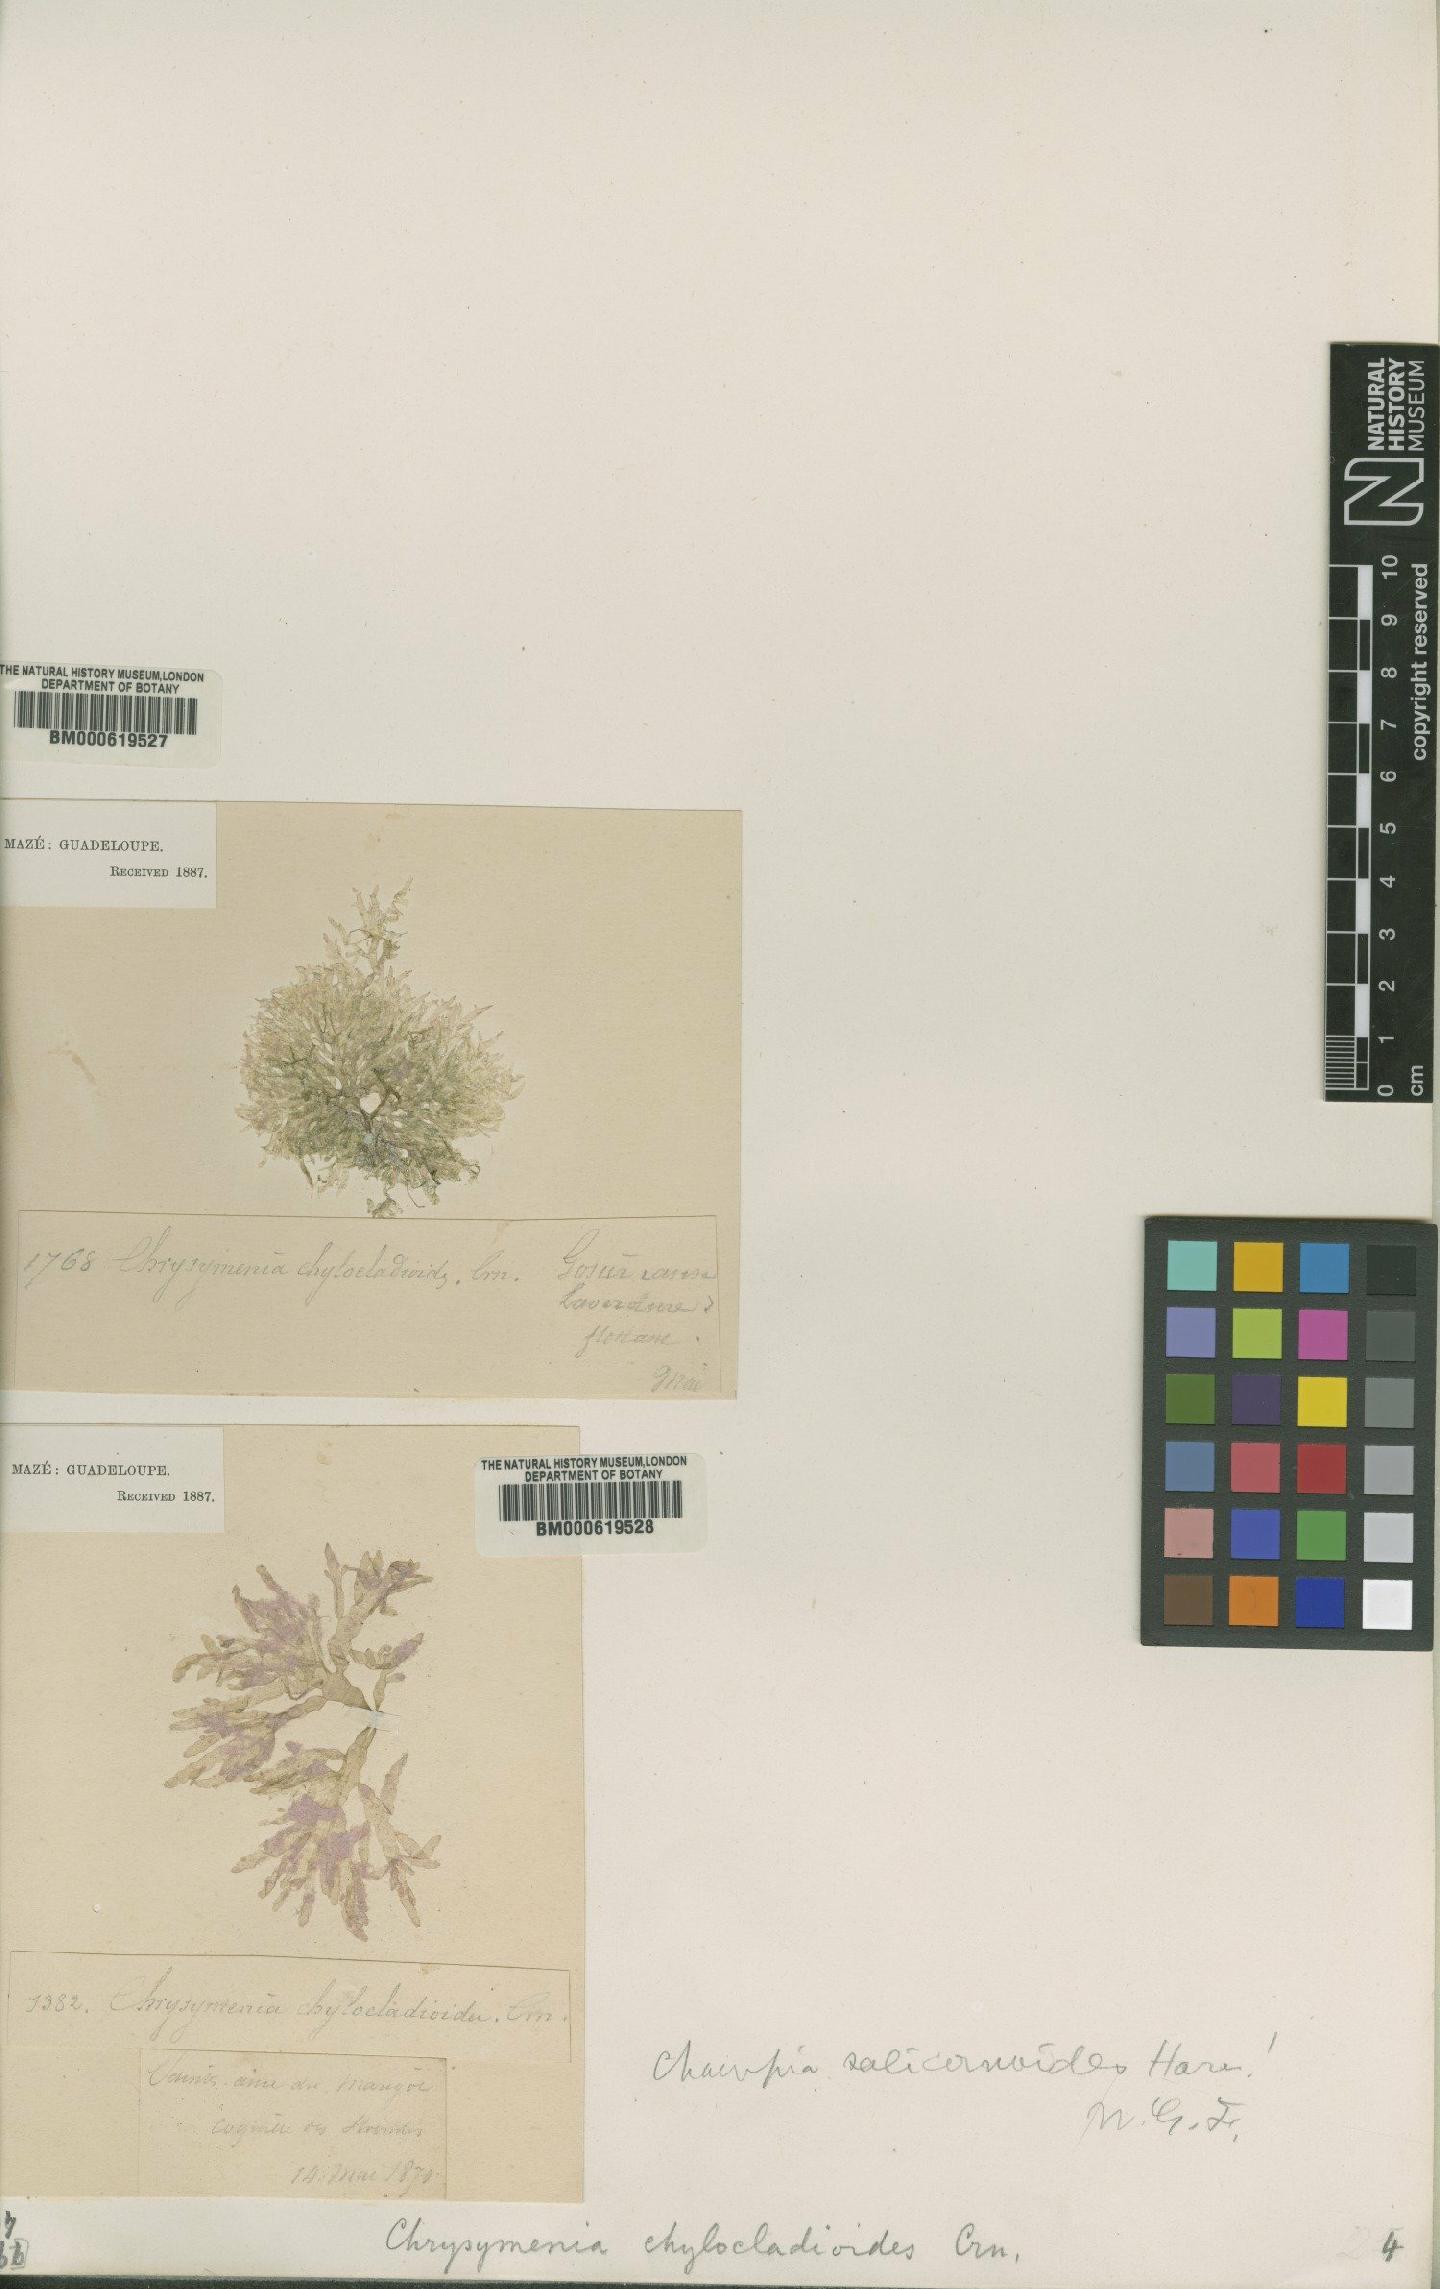 To NHMUK collection (Champia salicornioides Harv.; NHMUK:ecatalogue:4791232)